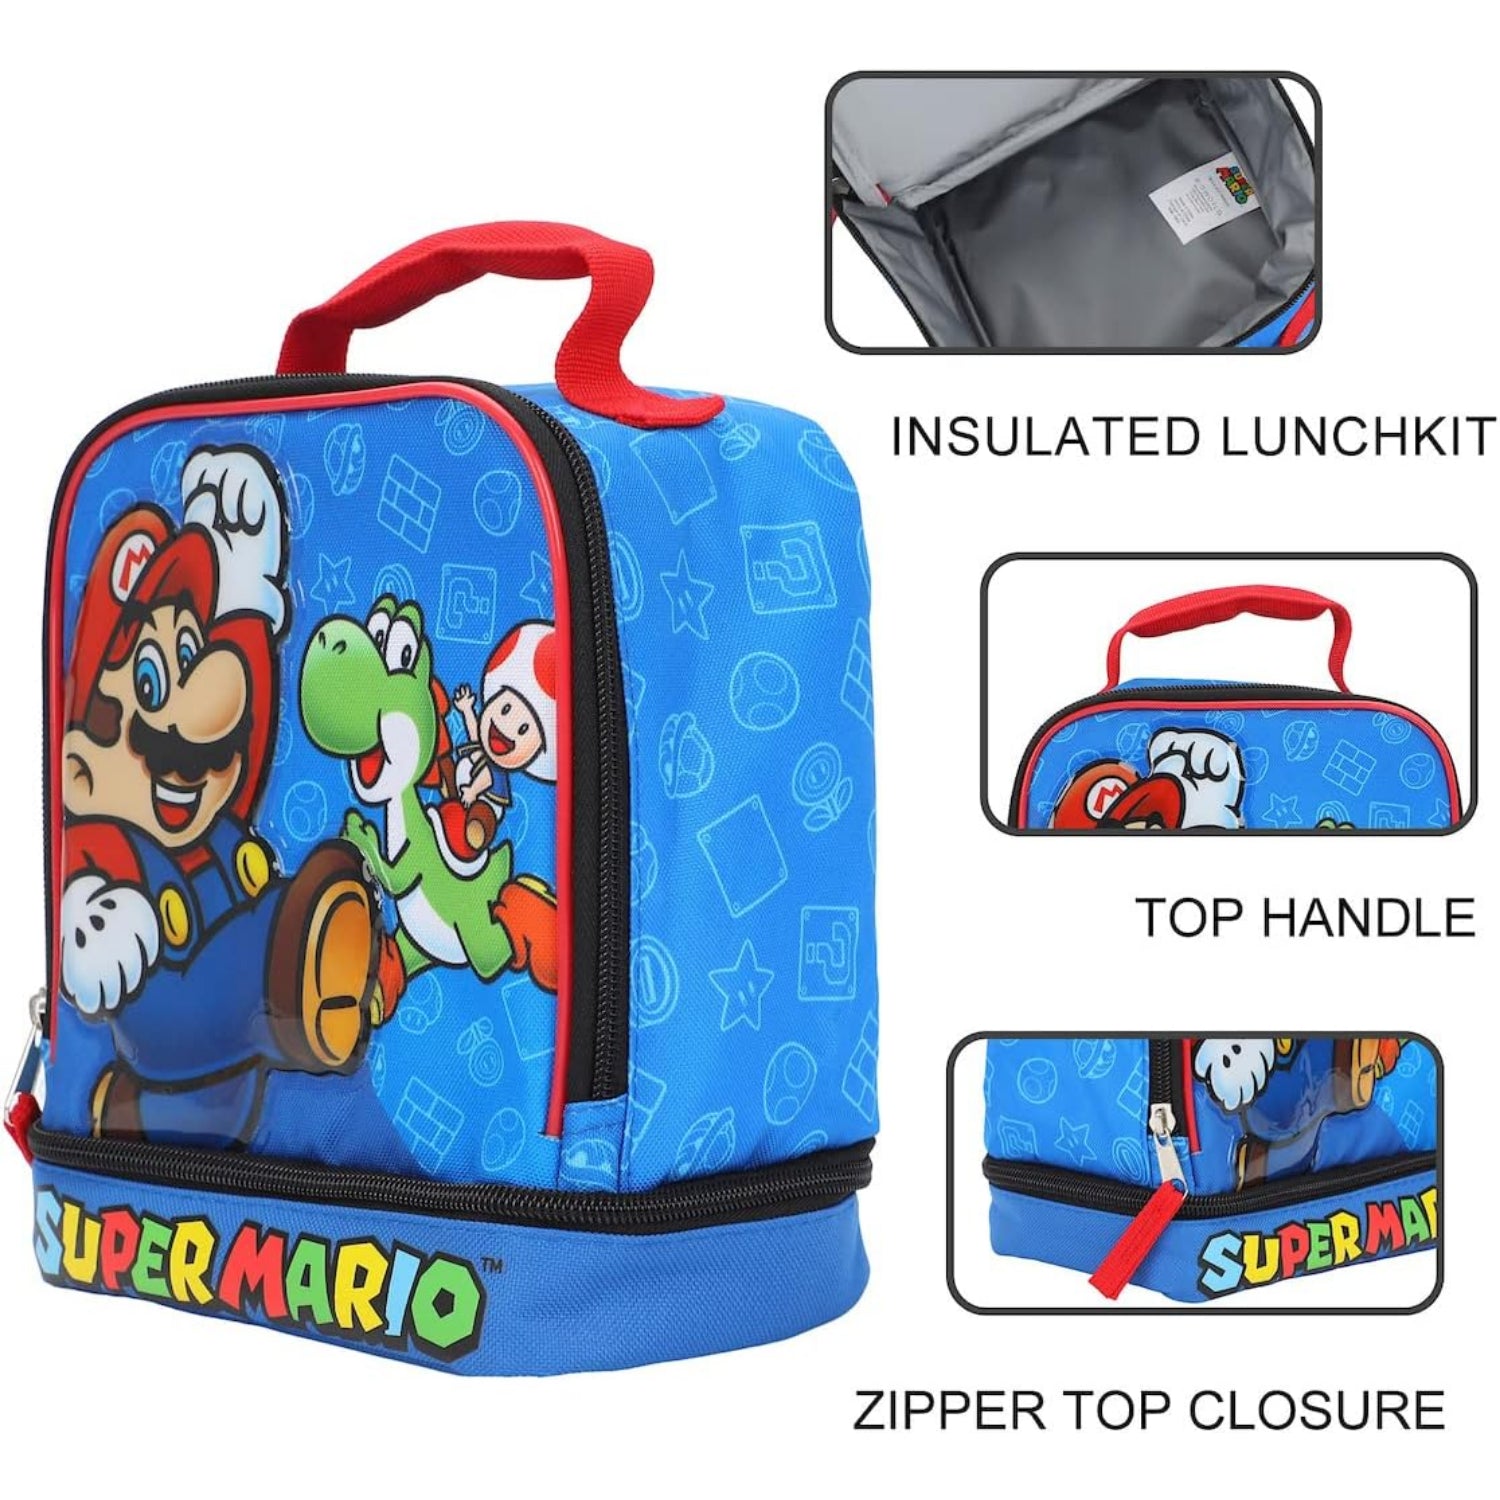 Nintendo Super Mario Insulated Double Compartment Insulated Lunch Box